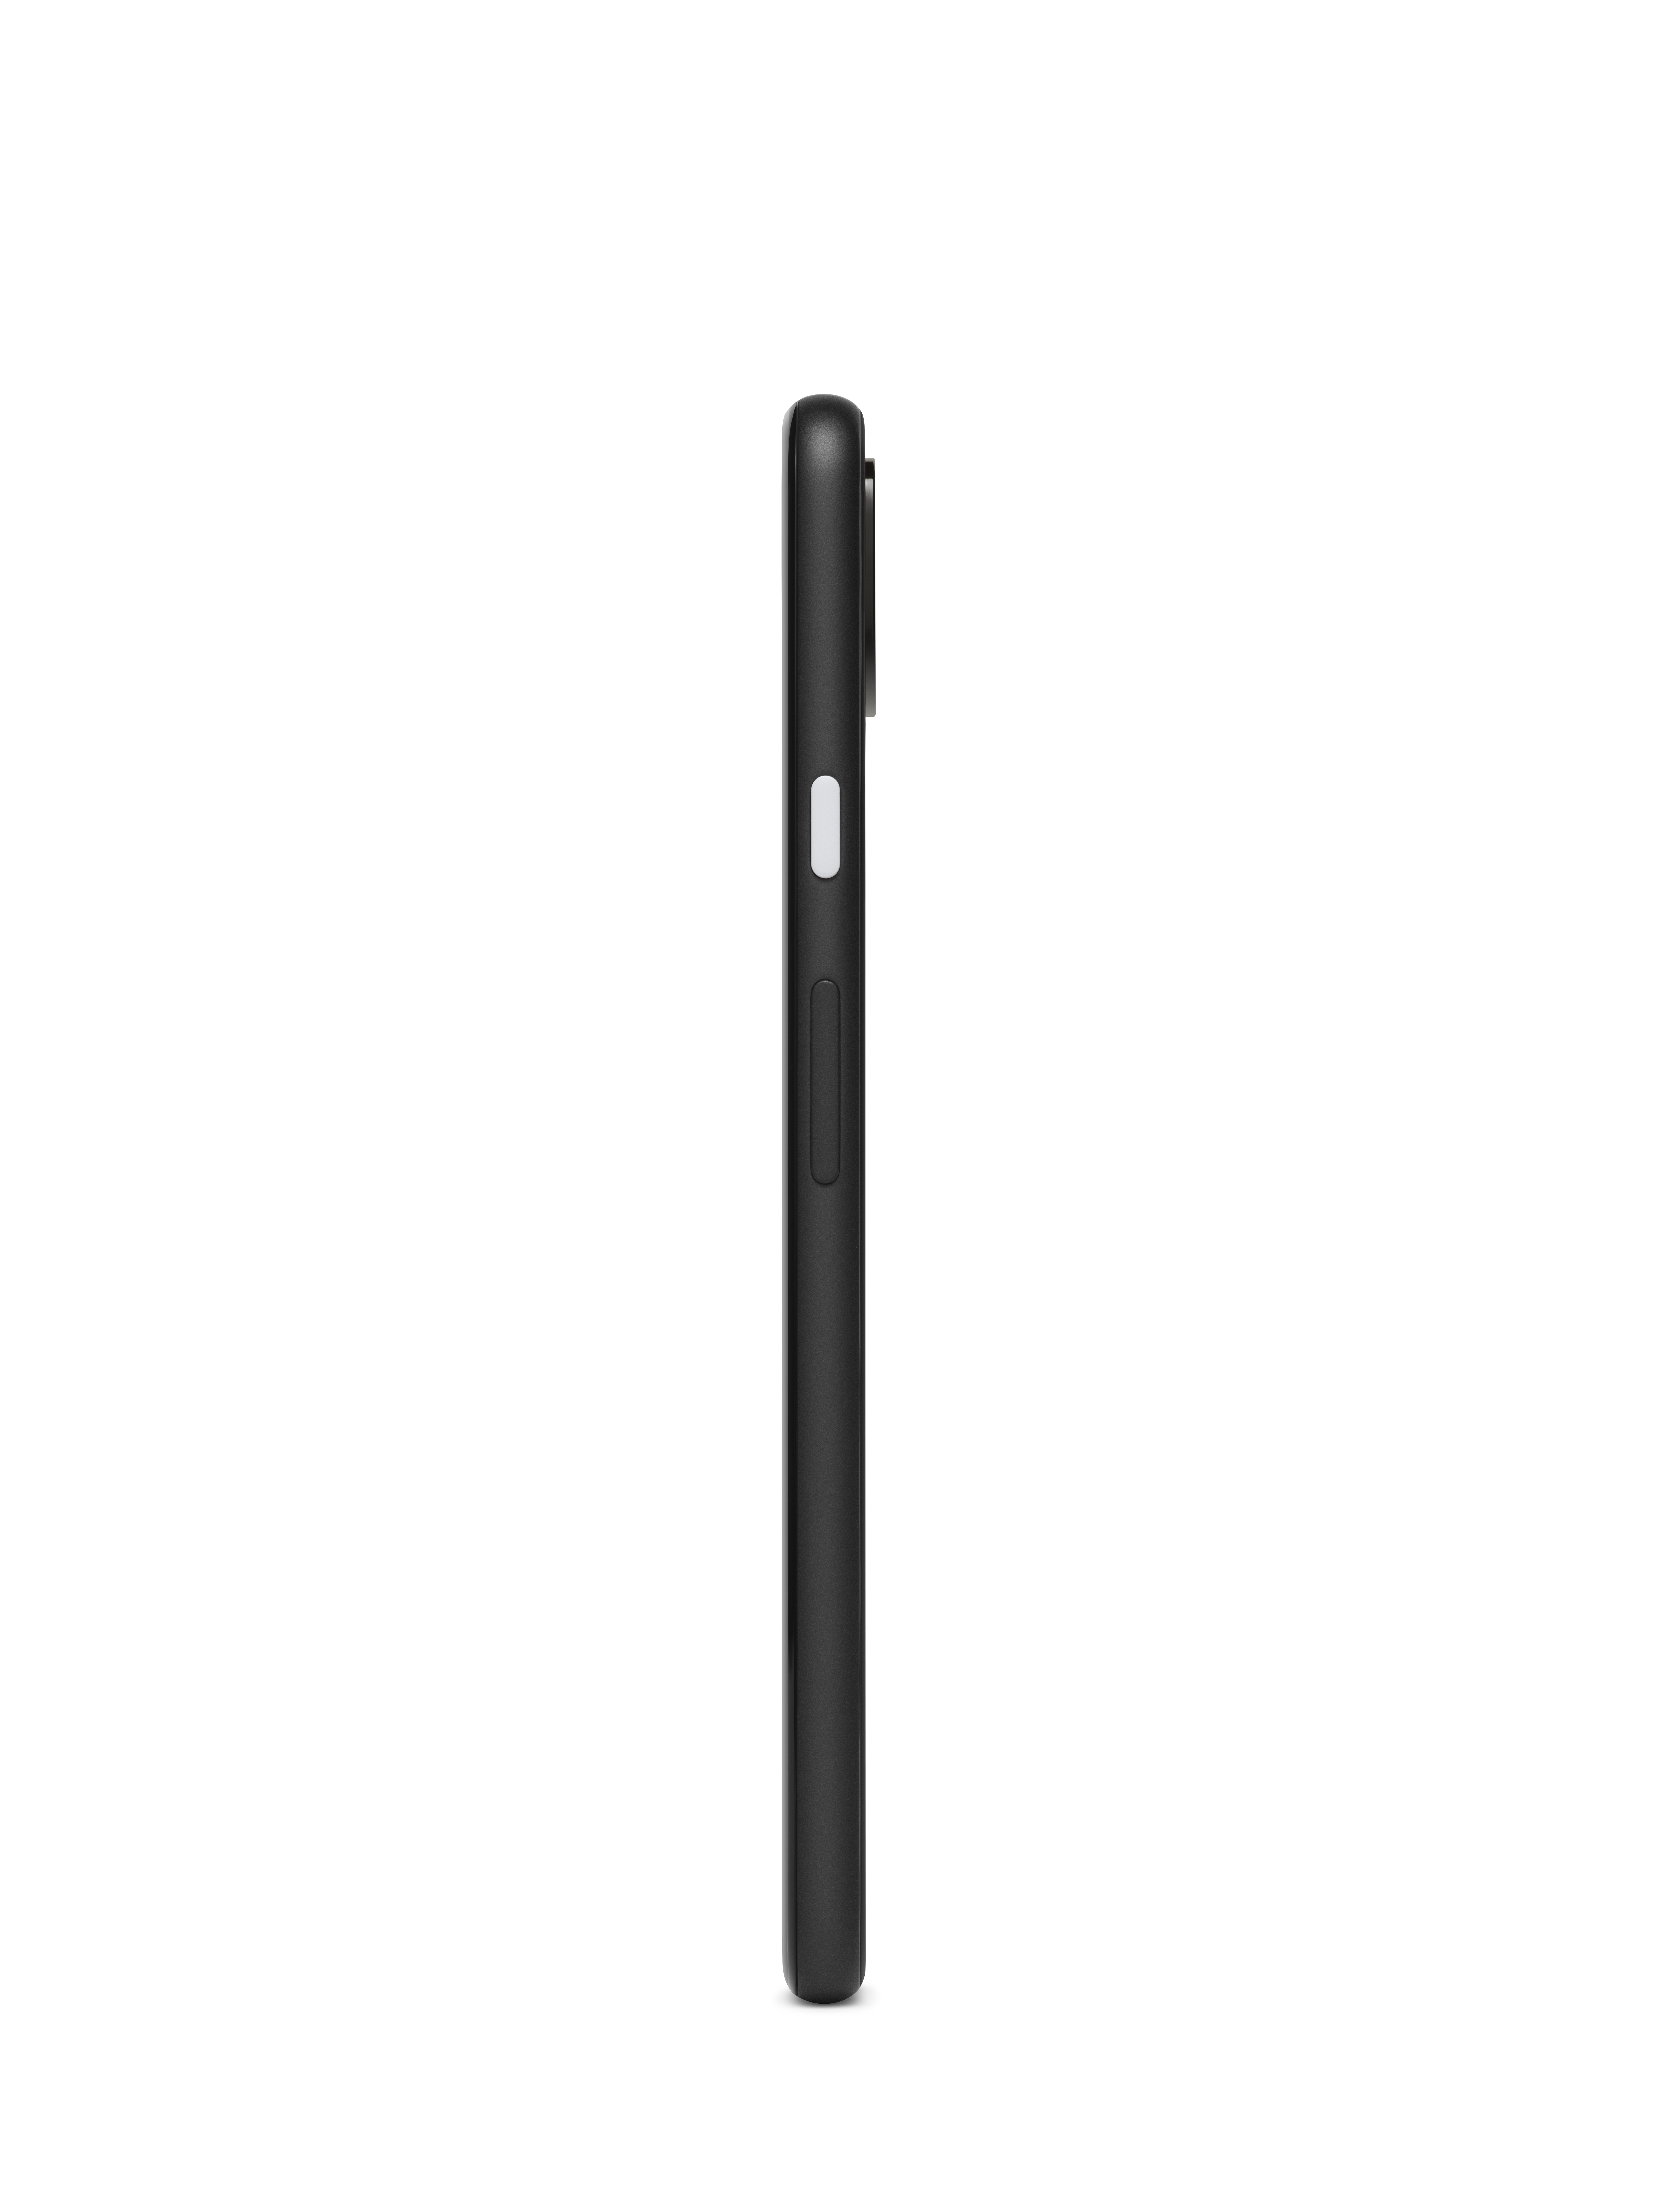 Google Pixel 4 XL Black 64 GB, Unlocked - image 3 of 4